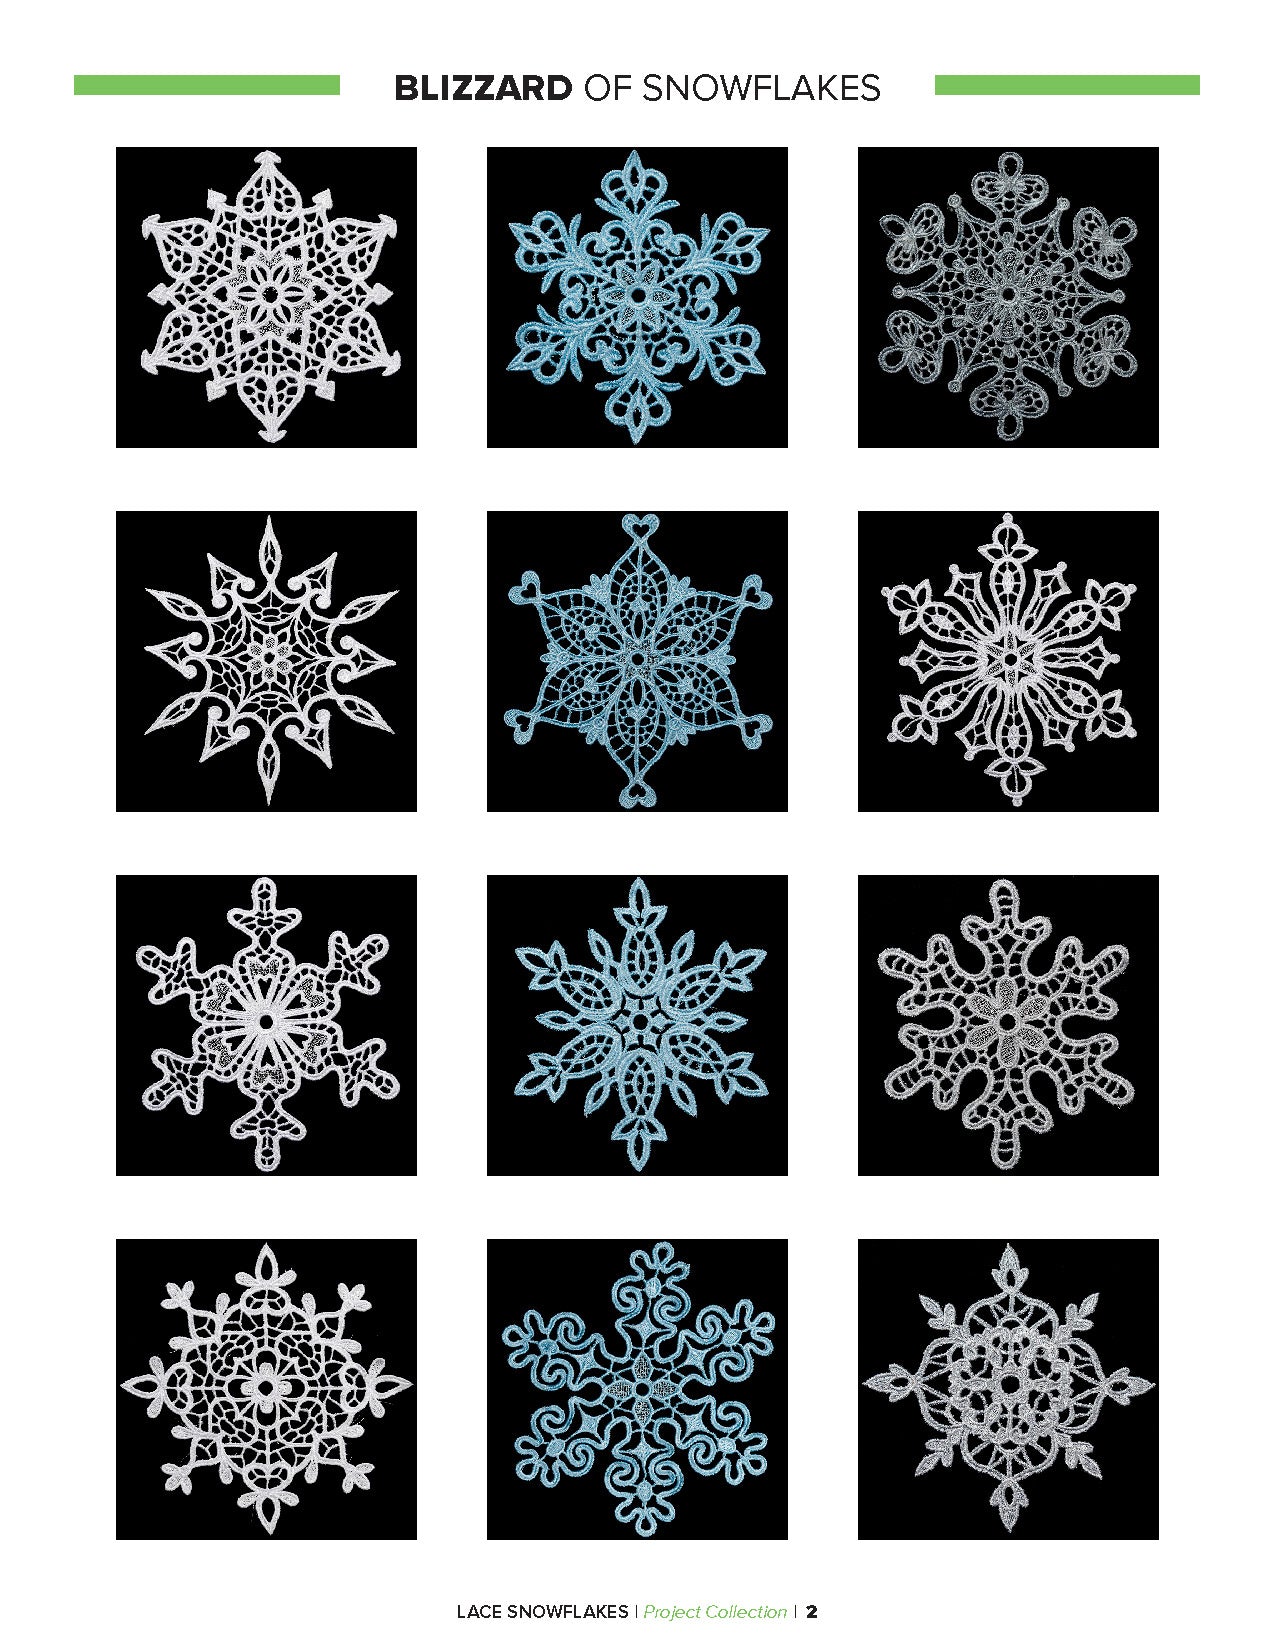 Lace Serene Snowflake Small Battenburg Handmade FSL Embroidery Table Decor  Holiday Home Decor Embellishment Appliqué 